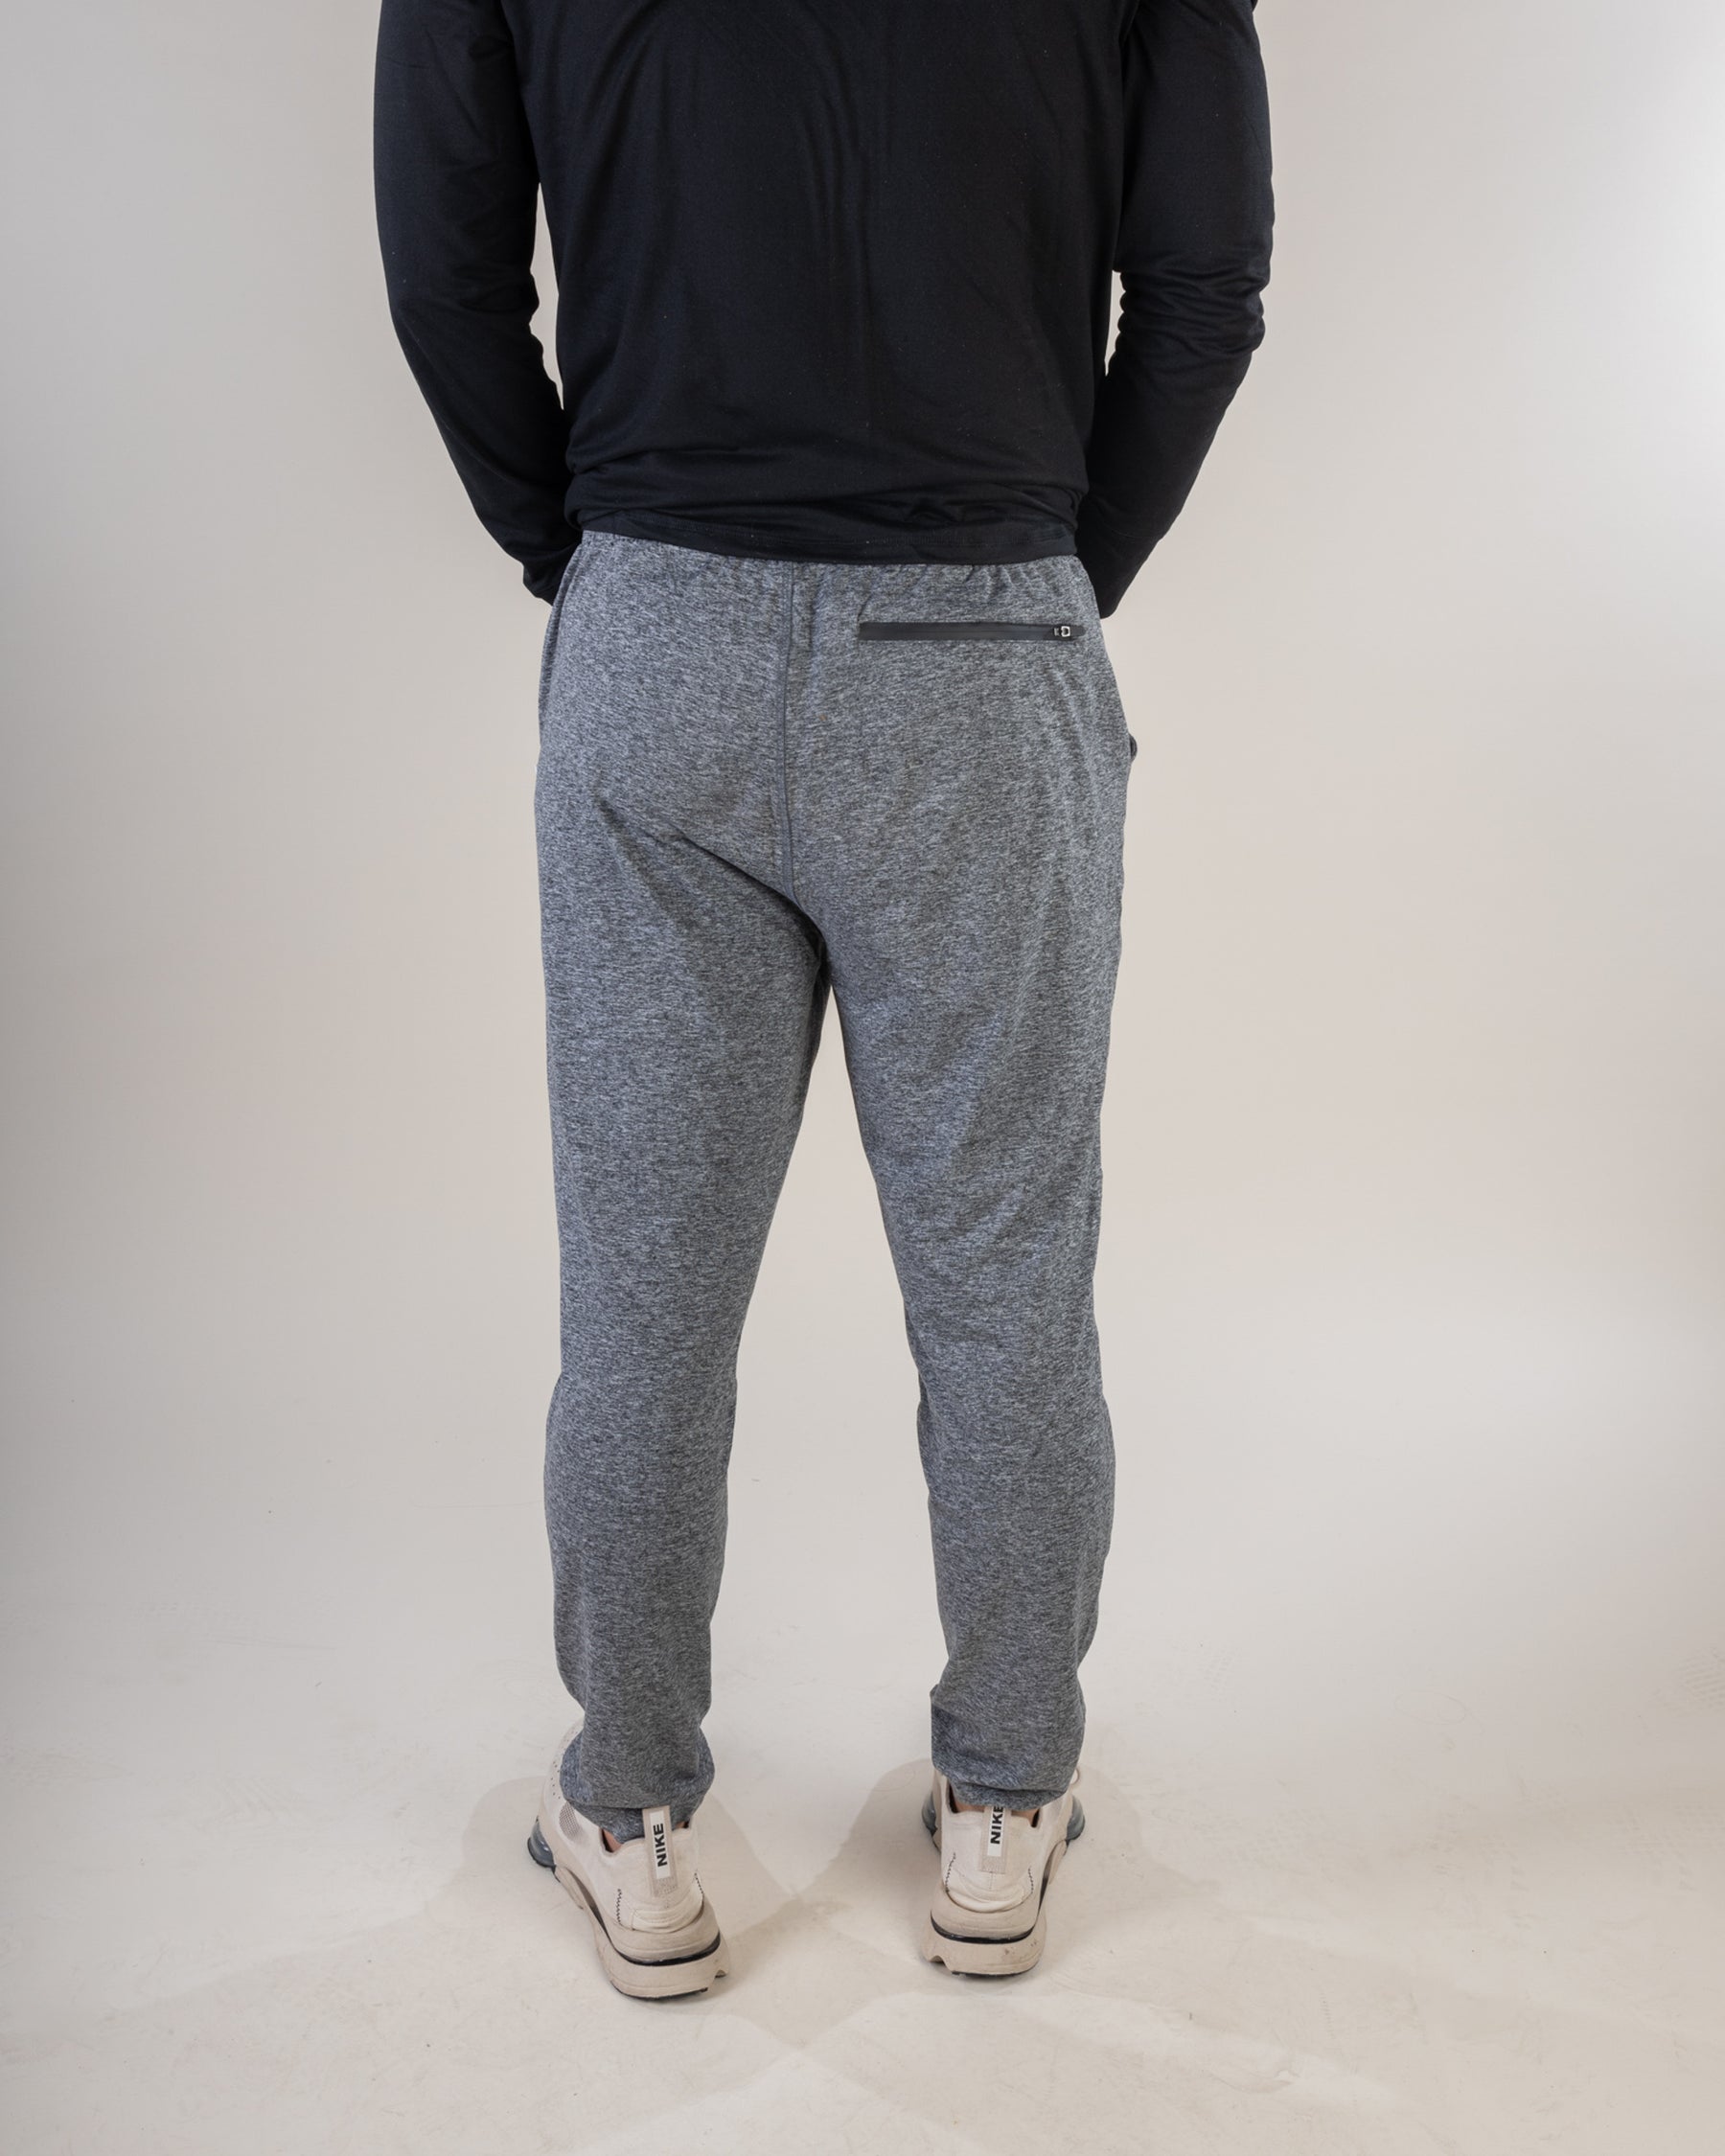 BlanketBlend Move Performance Pant - Crazy Comfortable Pants for Men